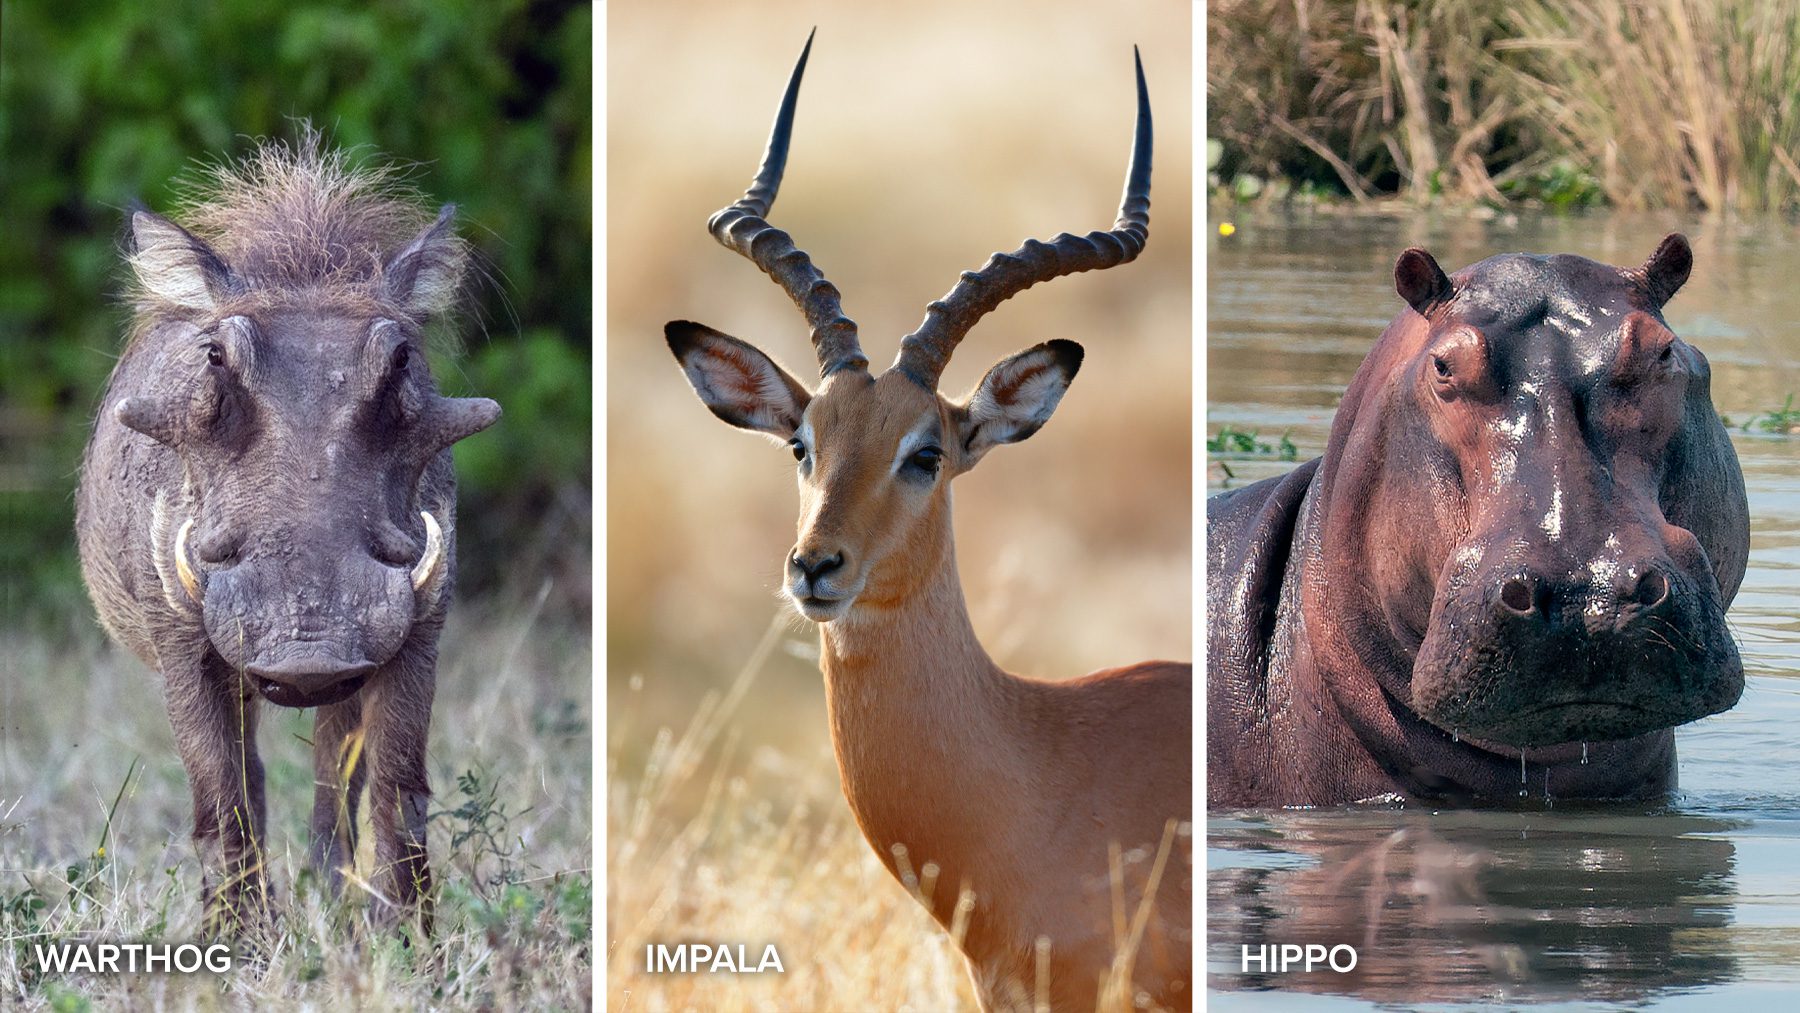 warthog impala and hippo quiz question